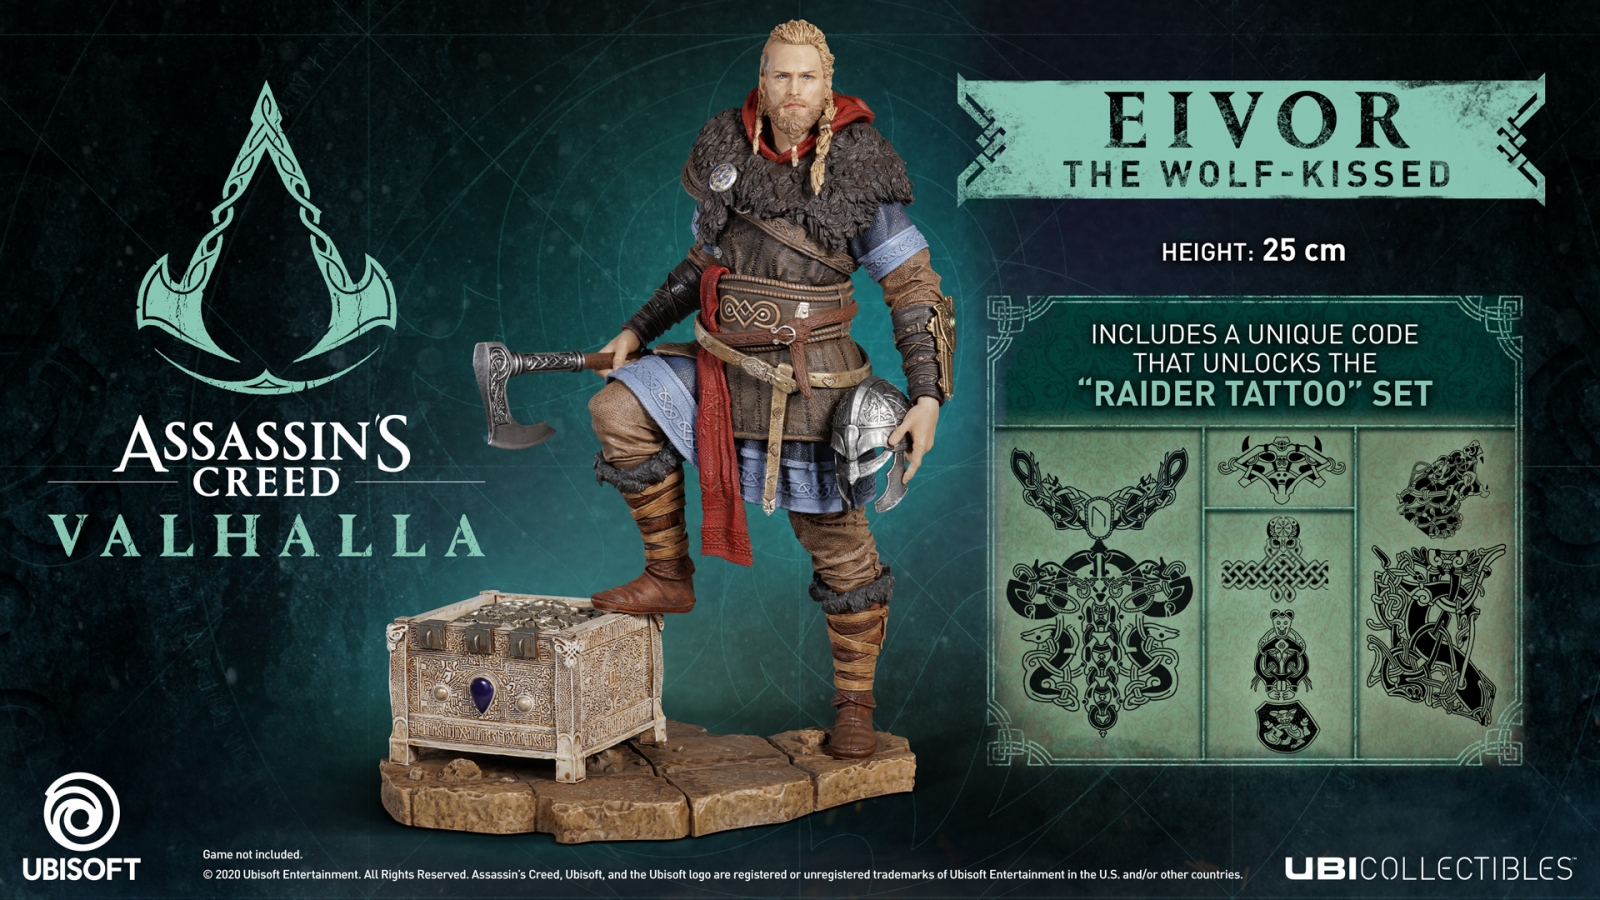 Assassin's Creed Valhalla: Eivor - The Wolf-kissed figurine